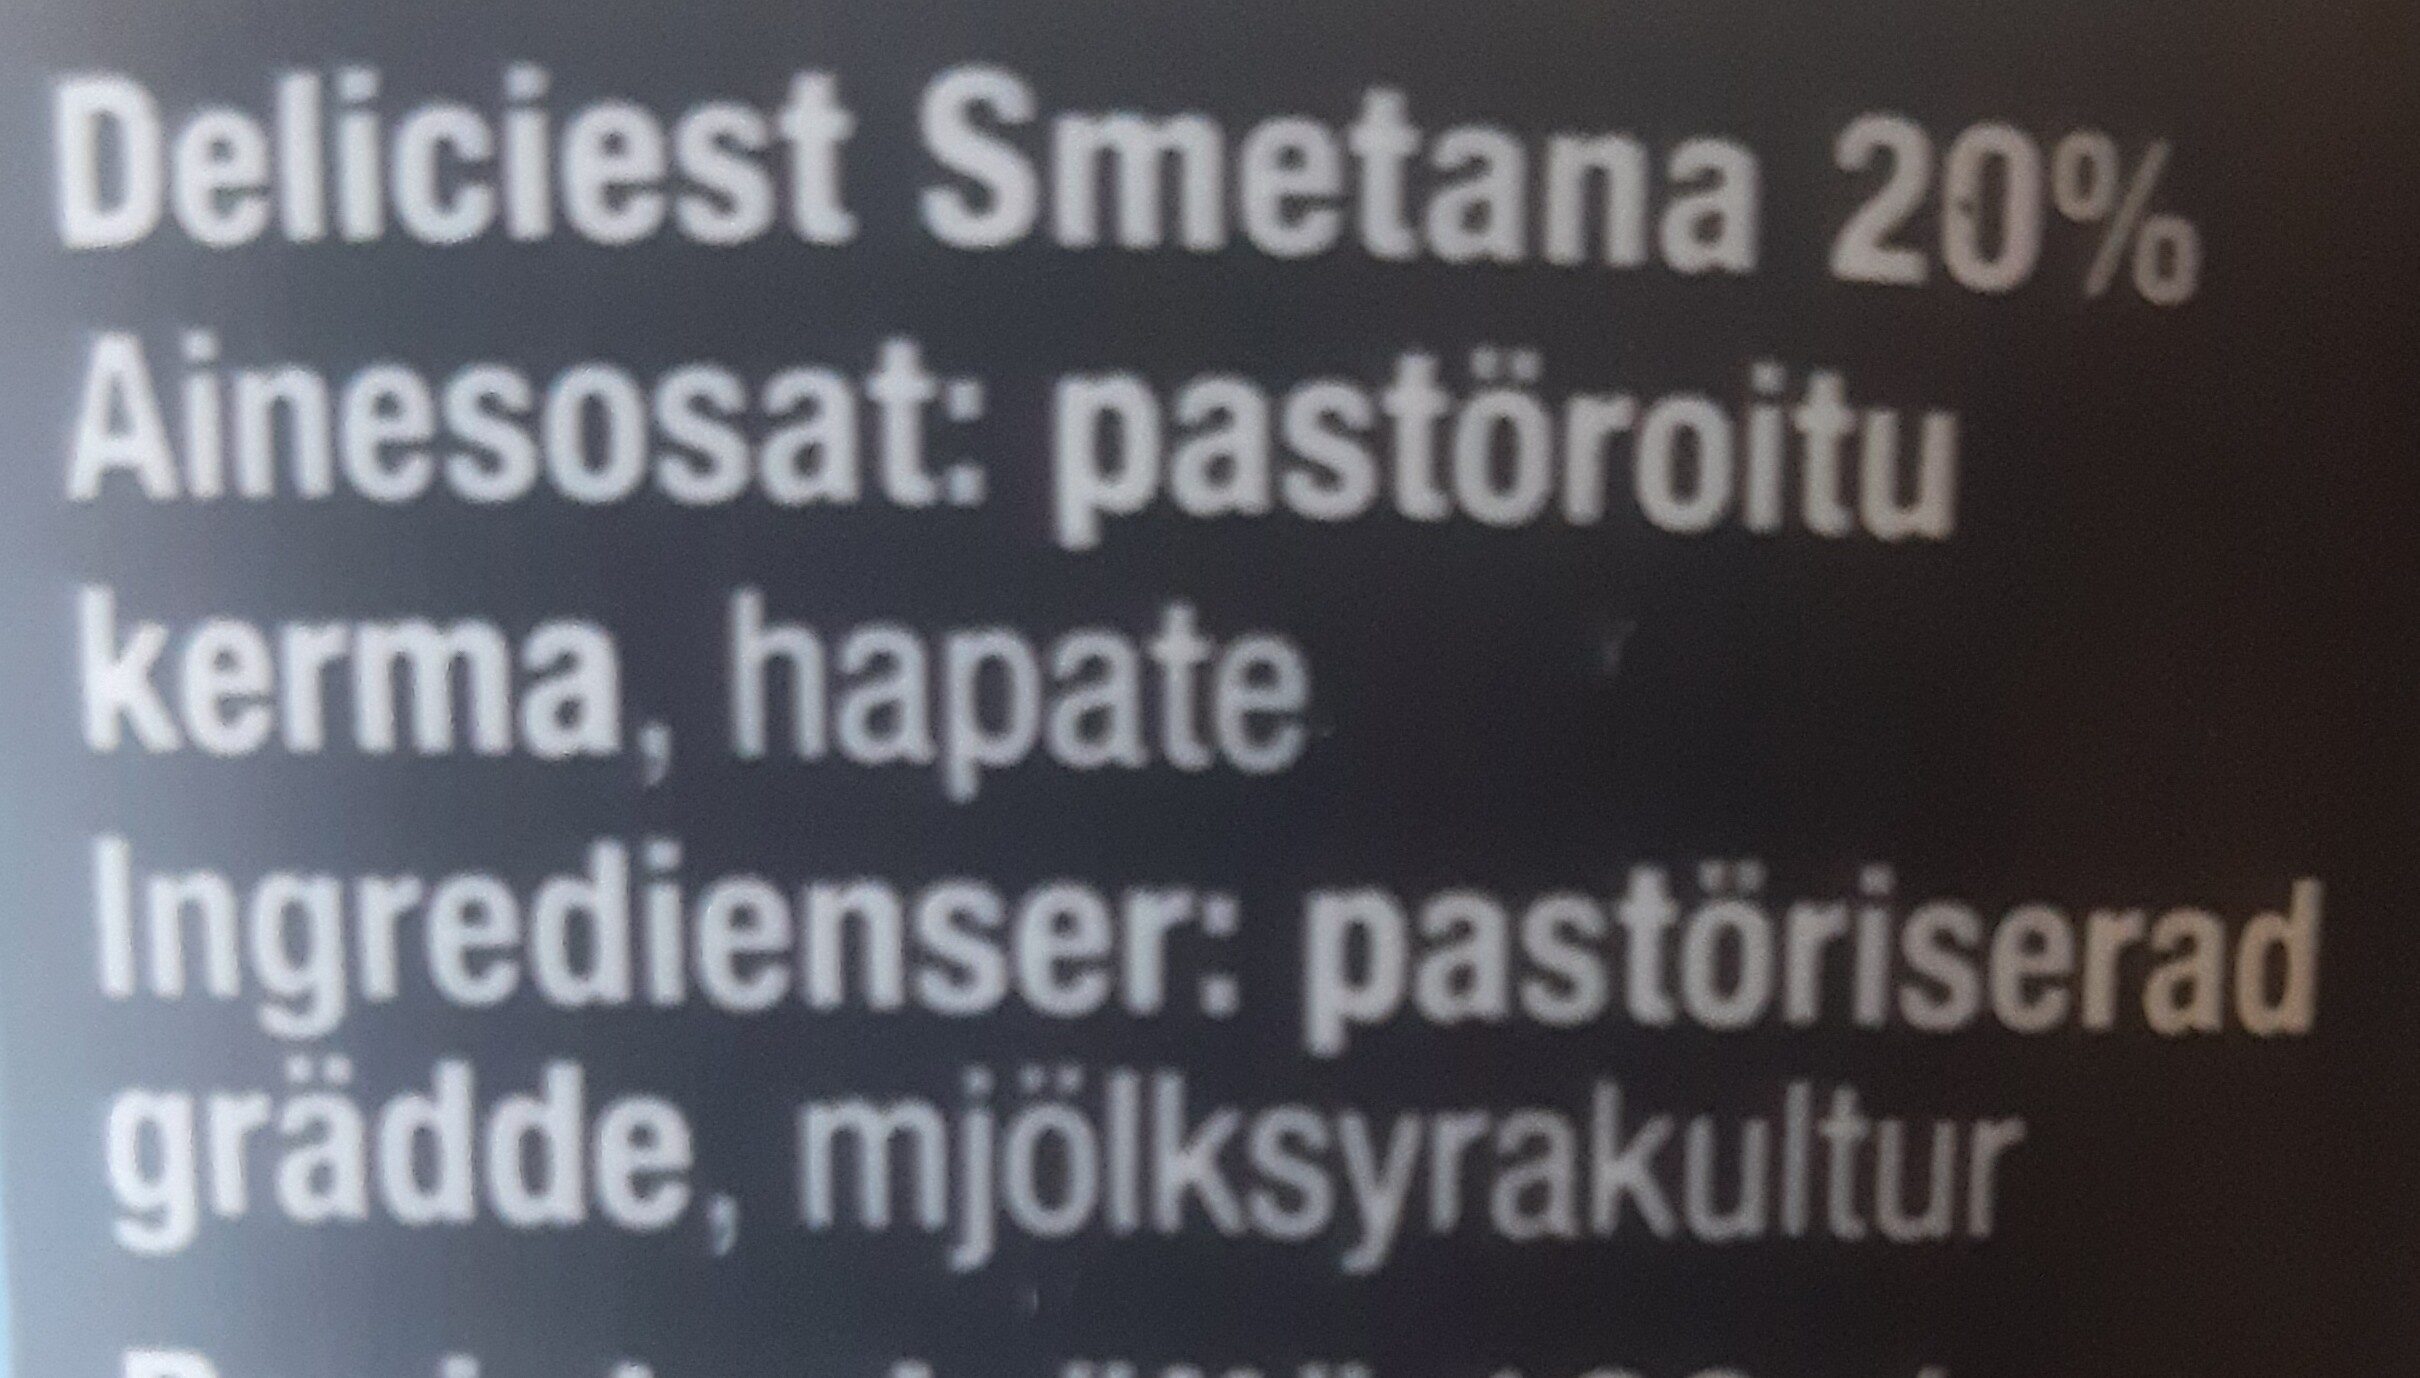 Smetana 20% - Ingredienser - ru